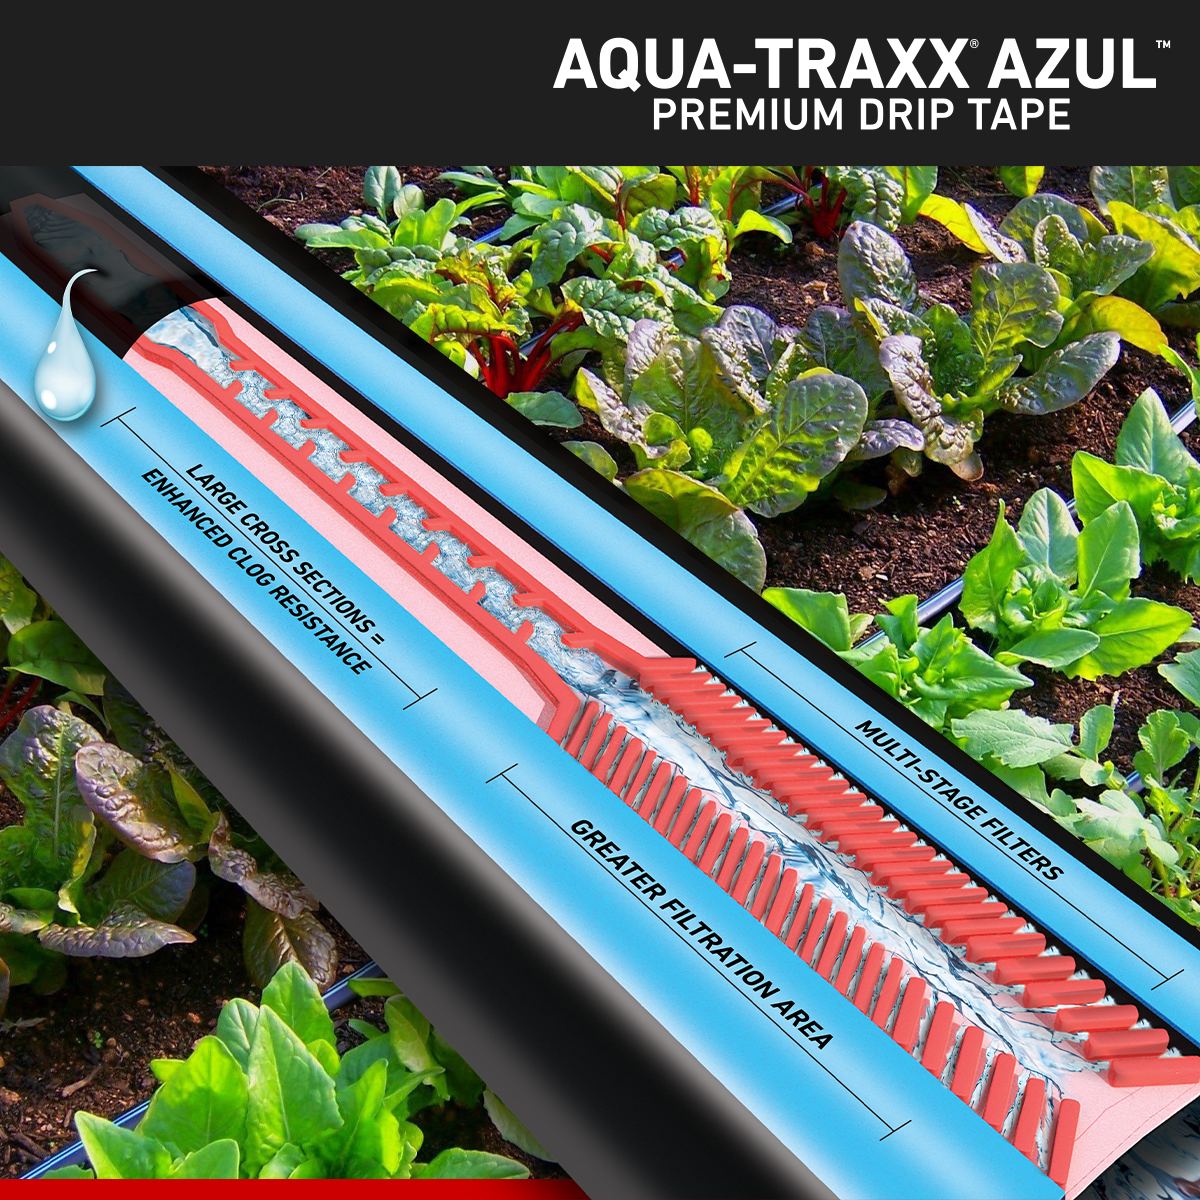 Launching Aqua-Traxx Azul drip tape, innovating precision agriculture